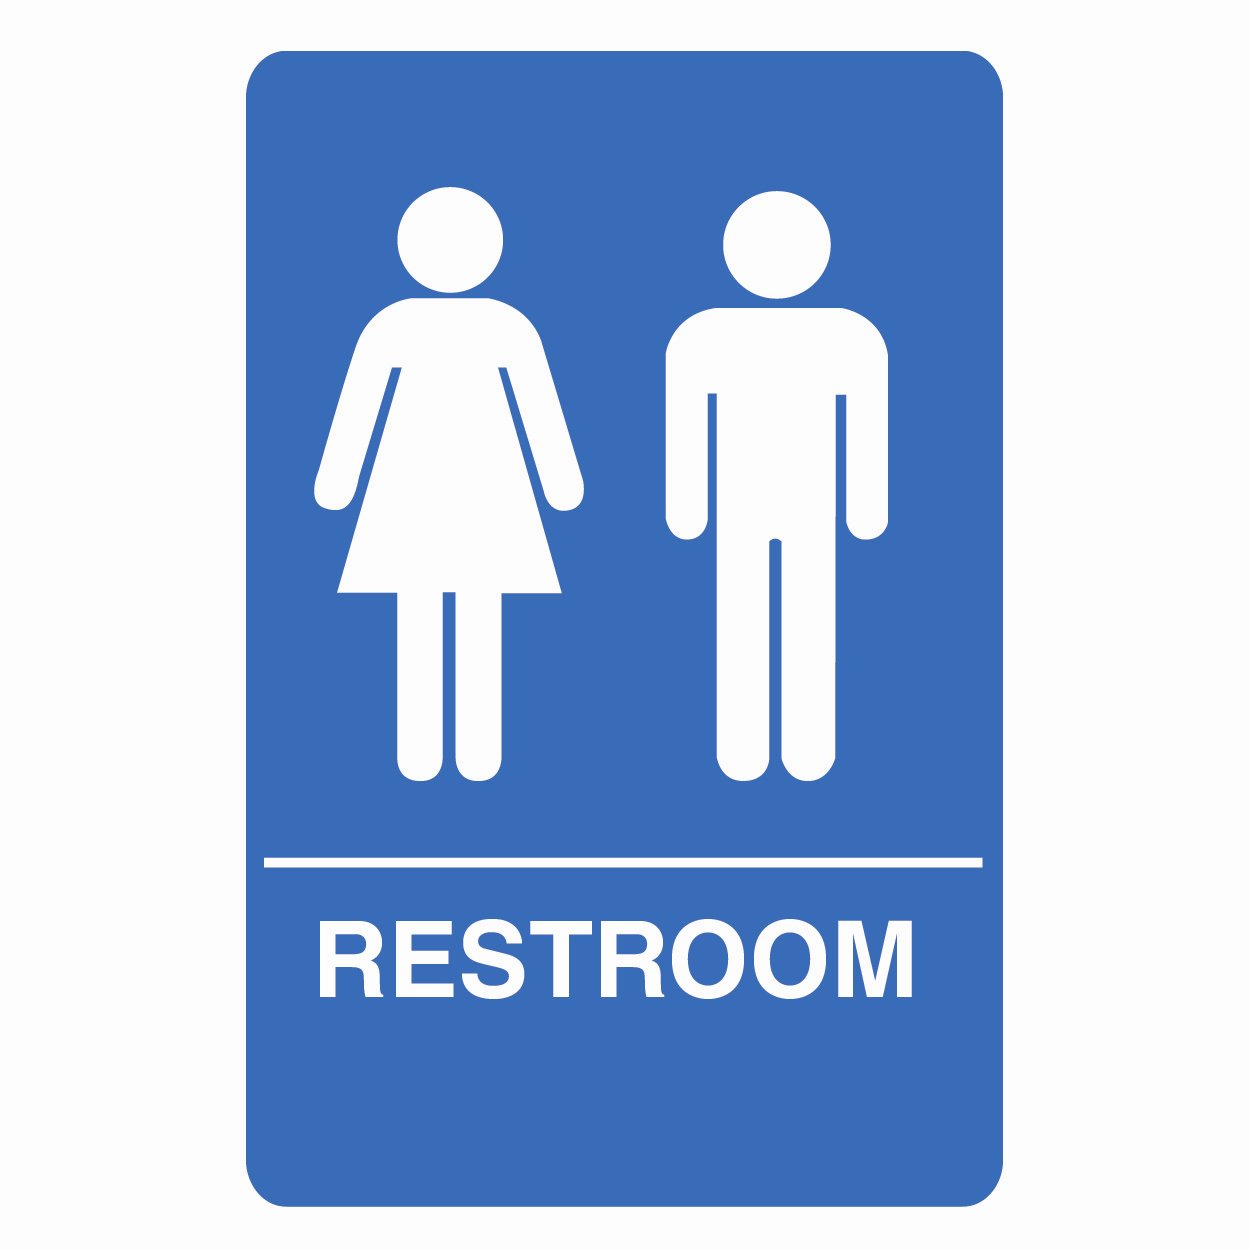 Restroom Signage Printable - Printable Templates